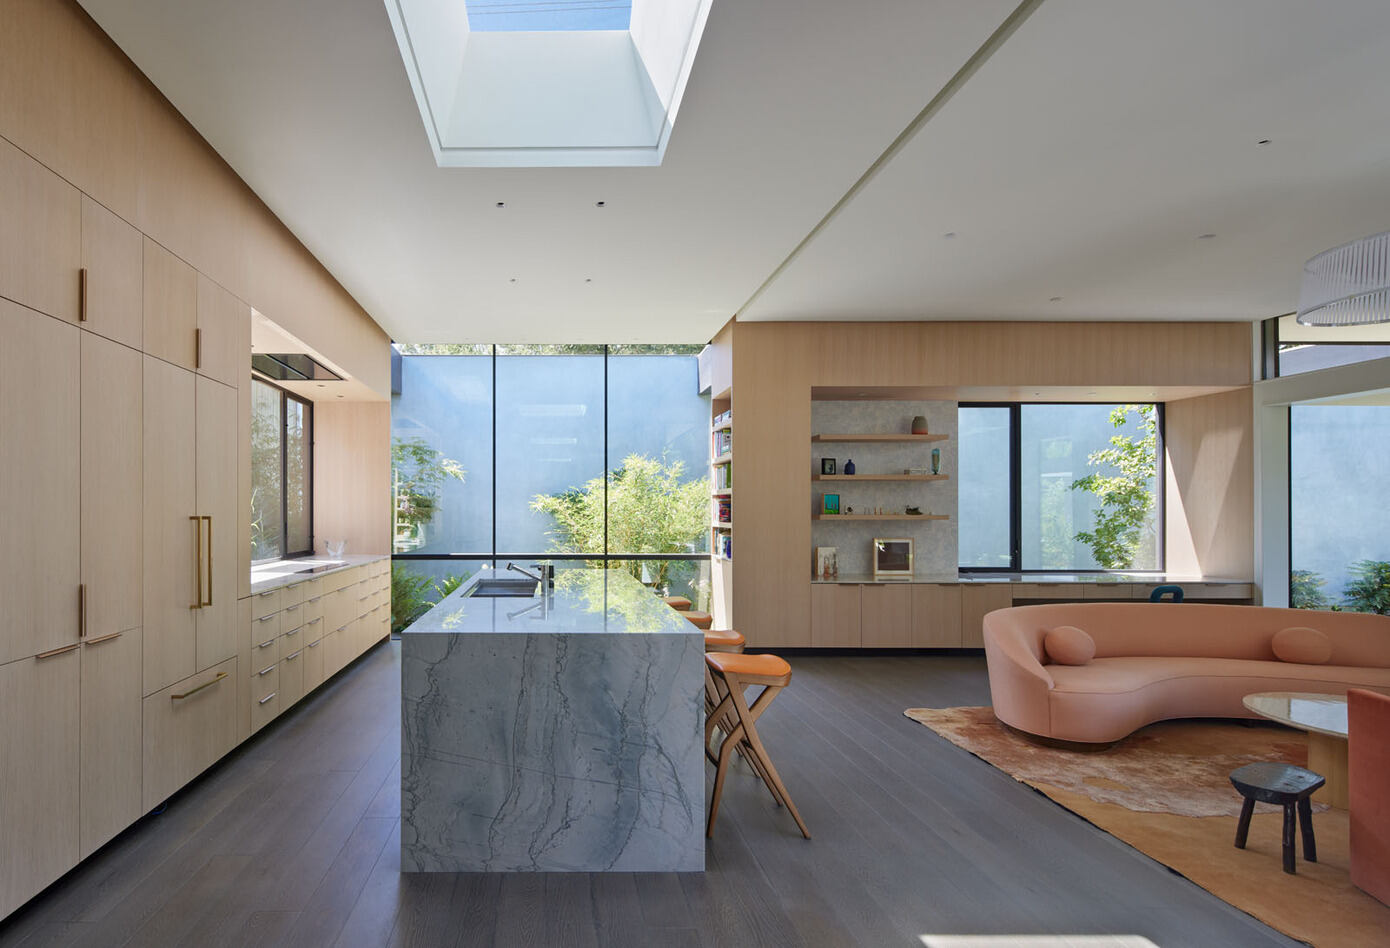 Modal Home: Architectural Fusion of Senses